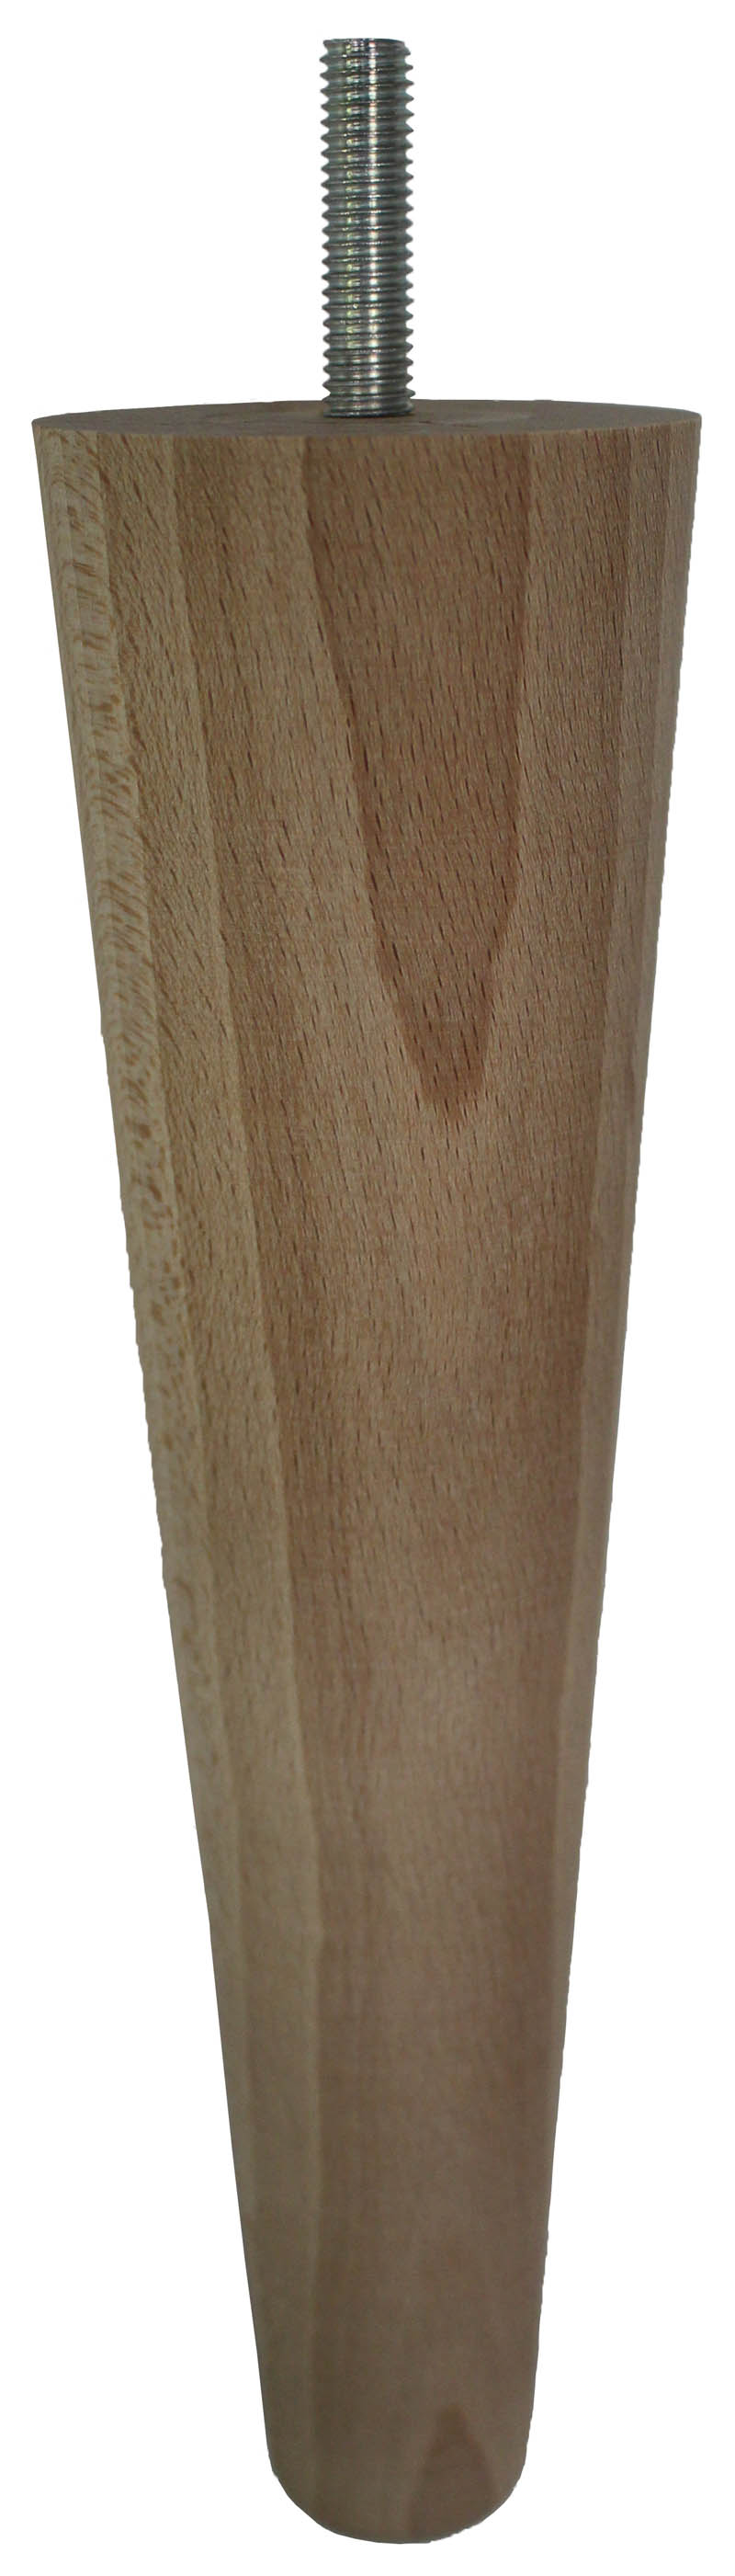 Autumn Tall Wooden Furniture Legs - Raw Finish - Set of 4